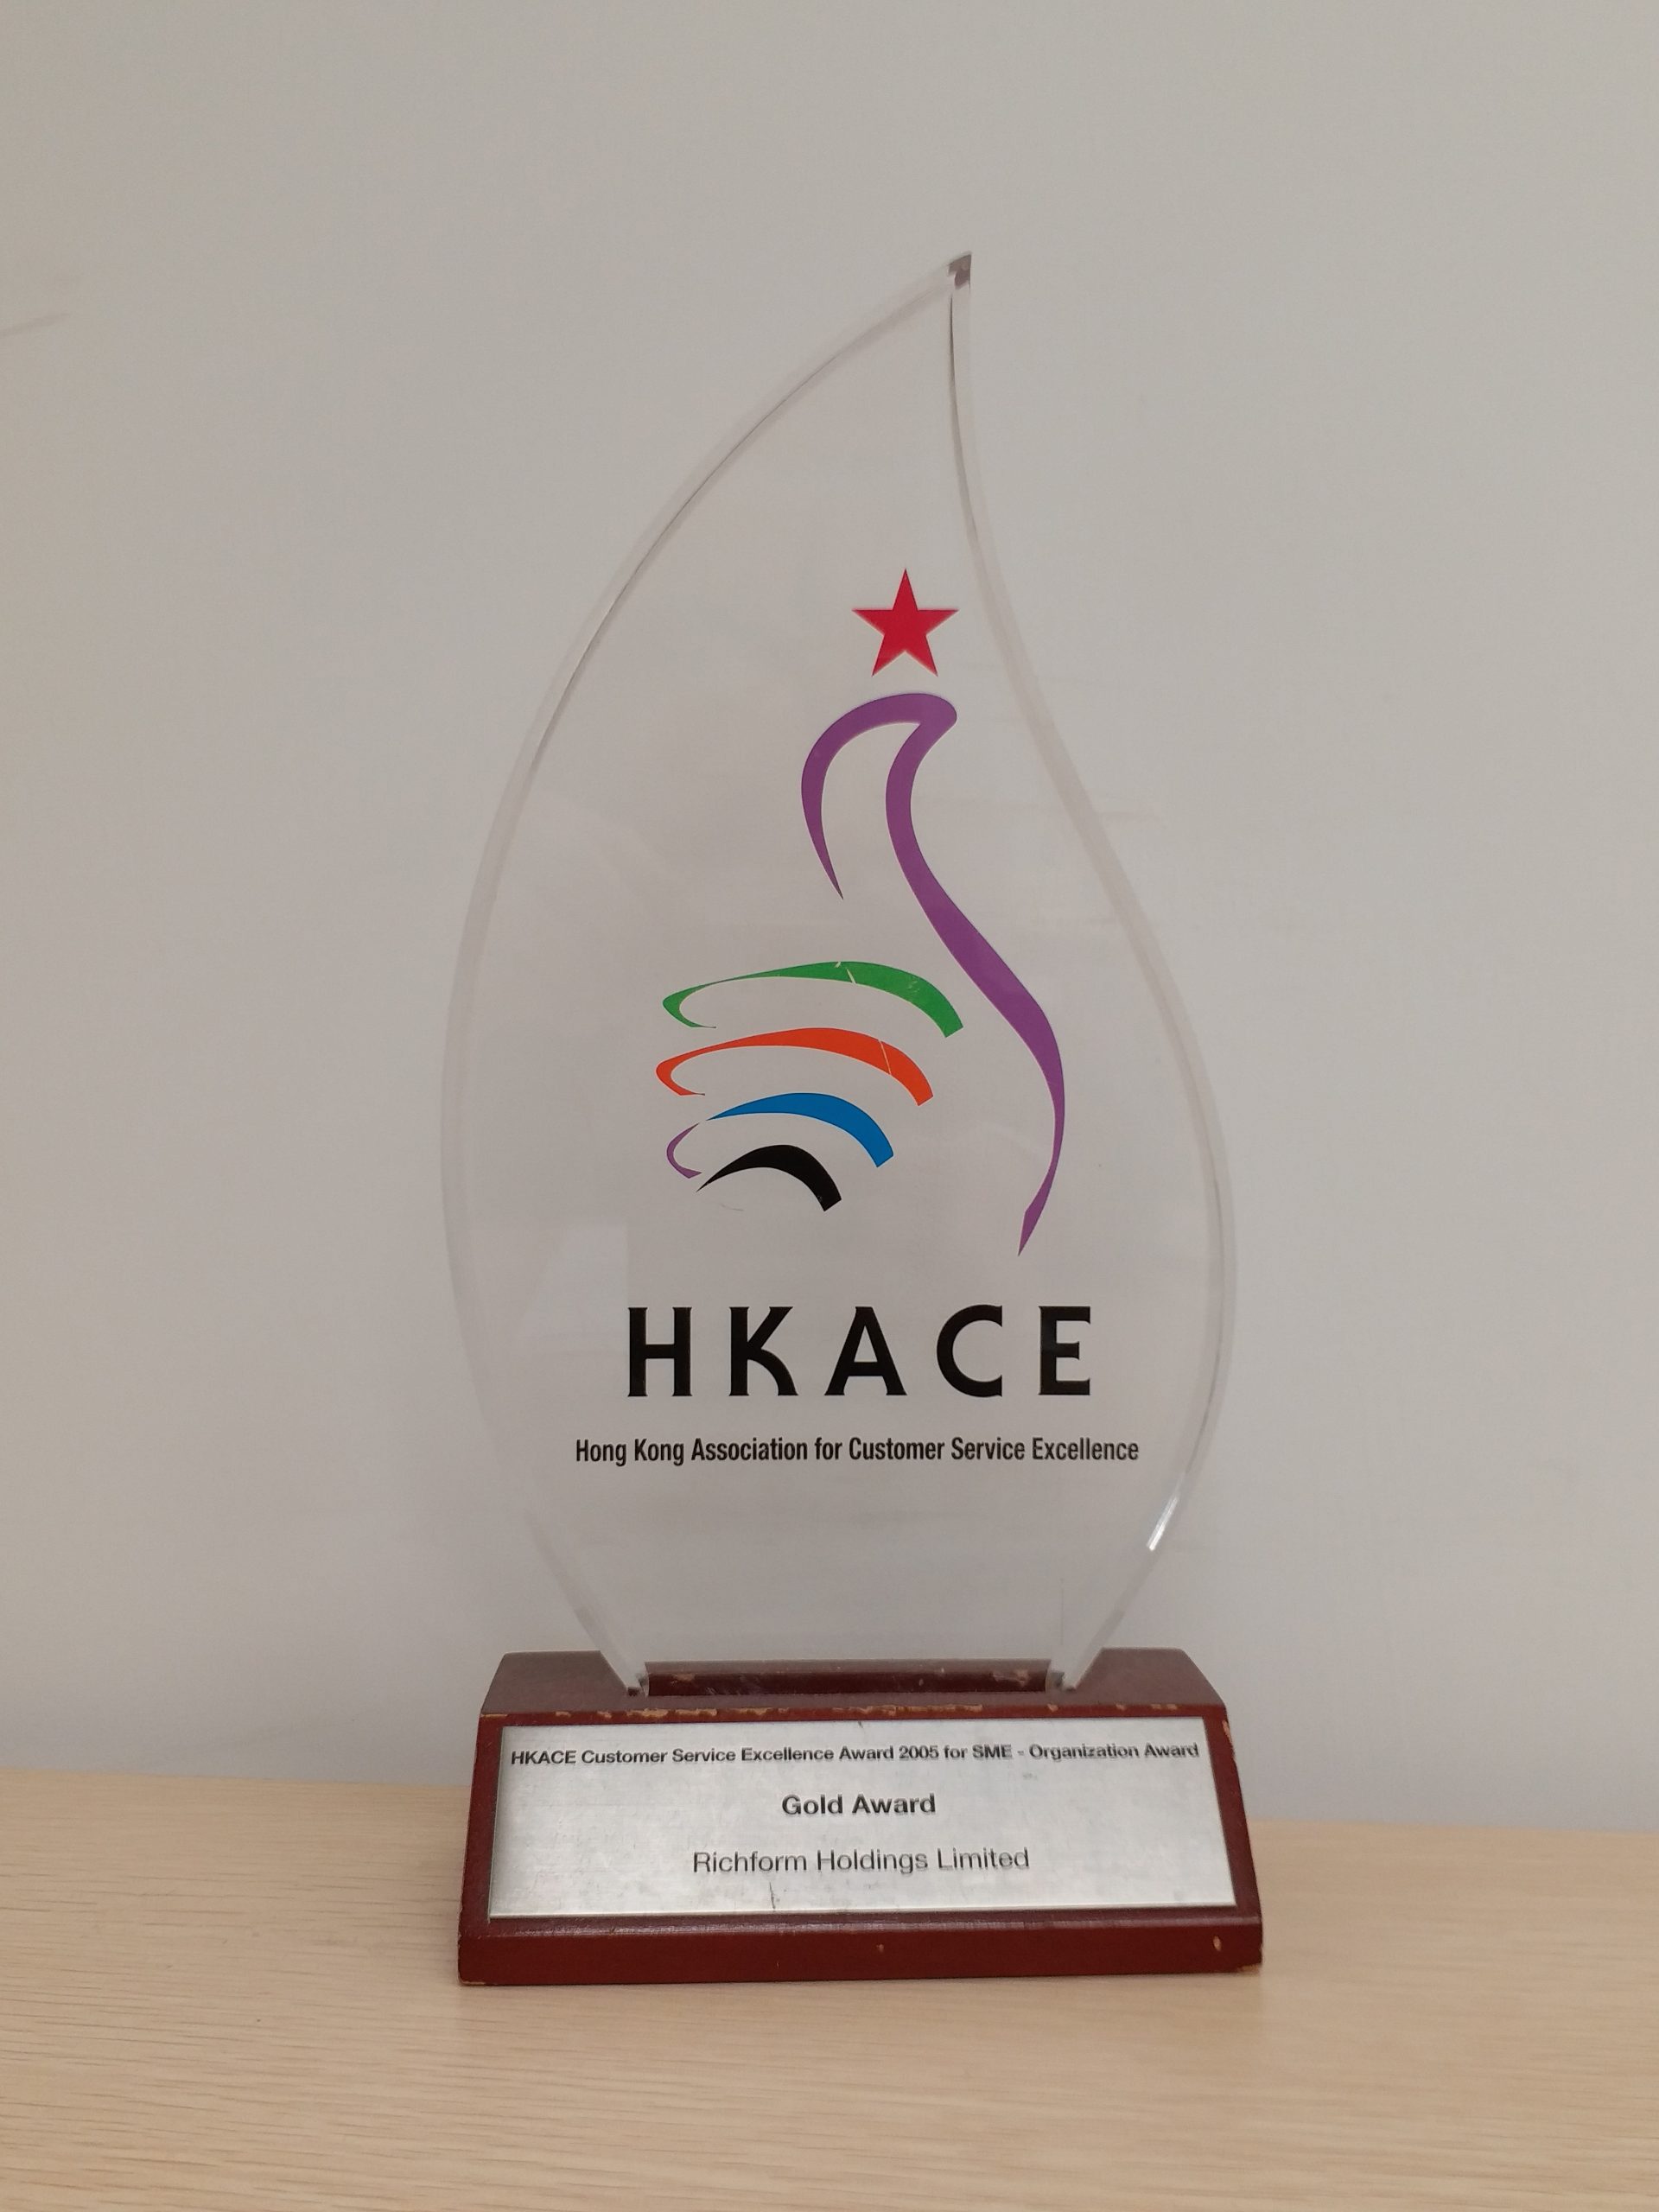  2005 HKACE Customer Service Excellence Award 2005 for SME Organization Award Gold Award